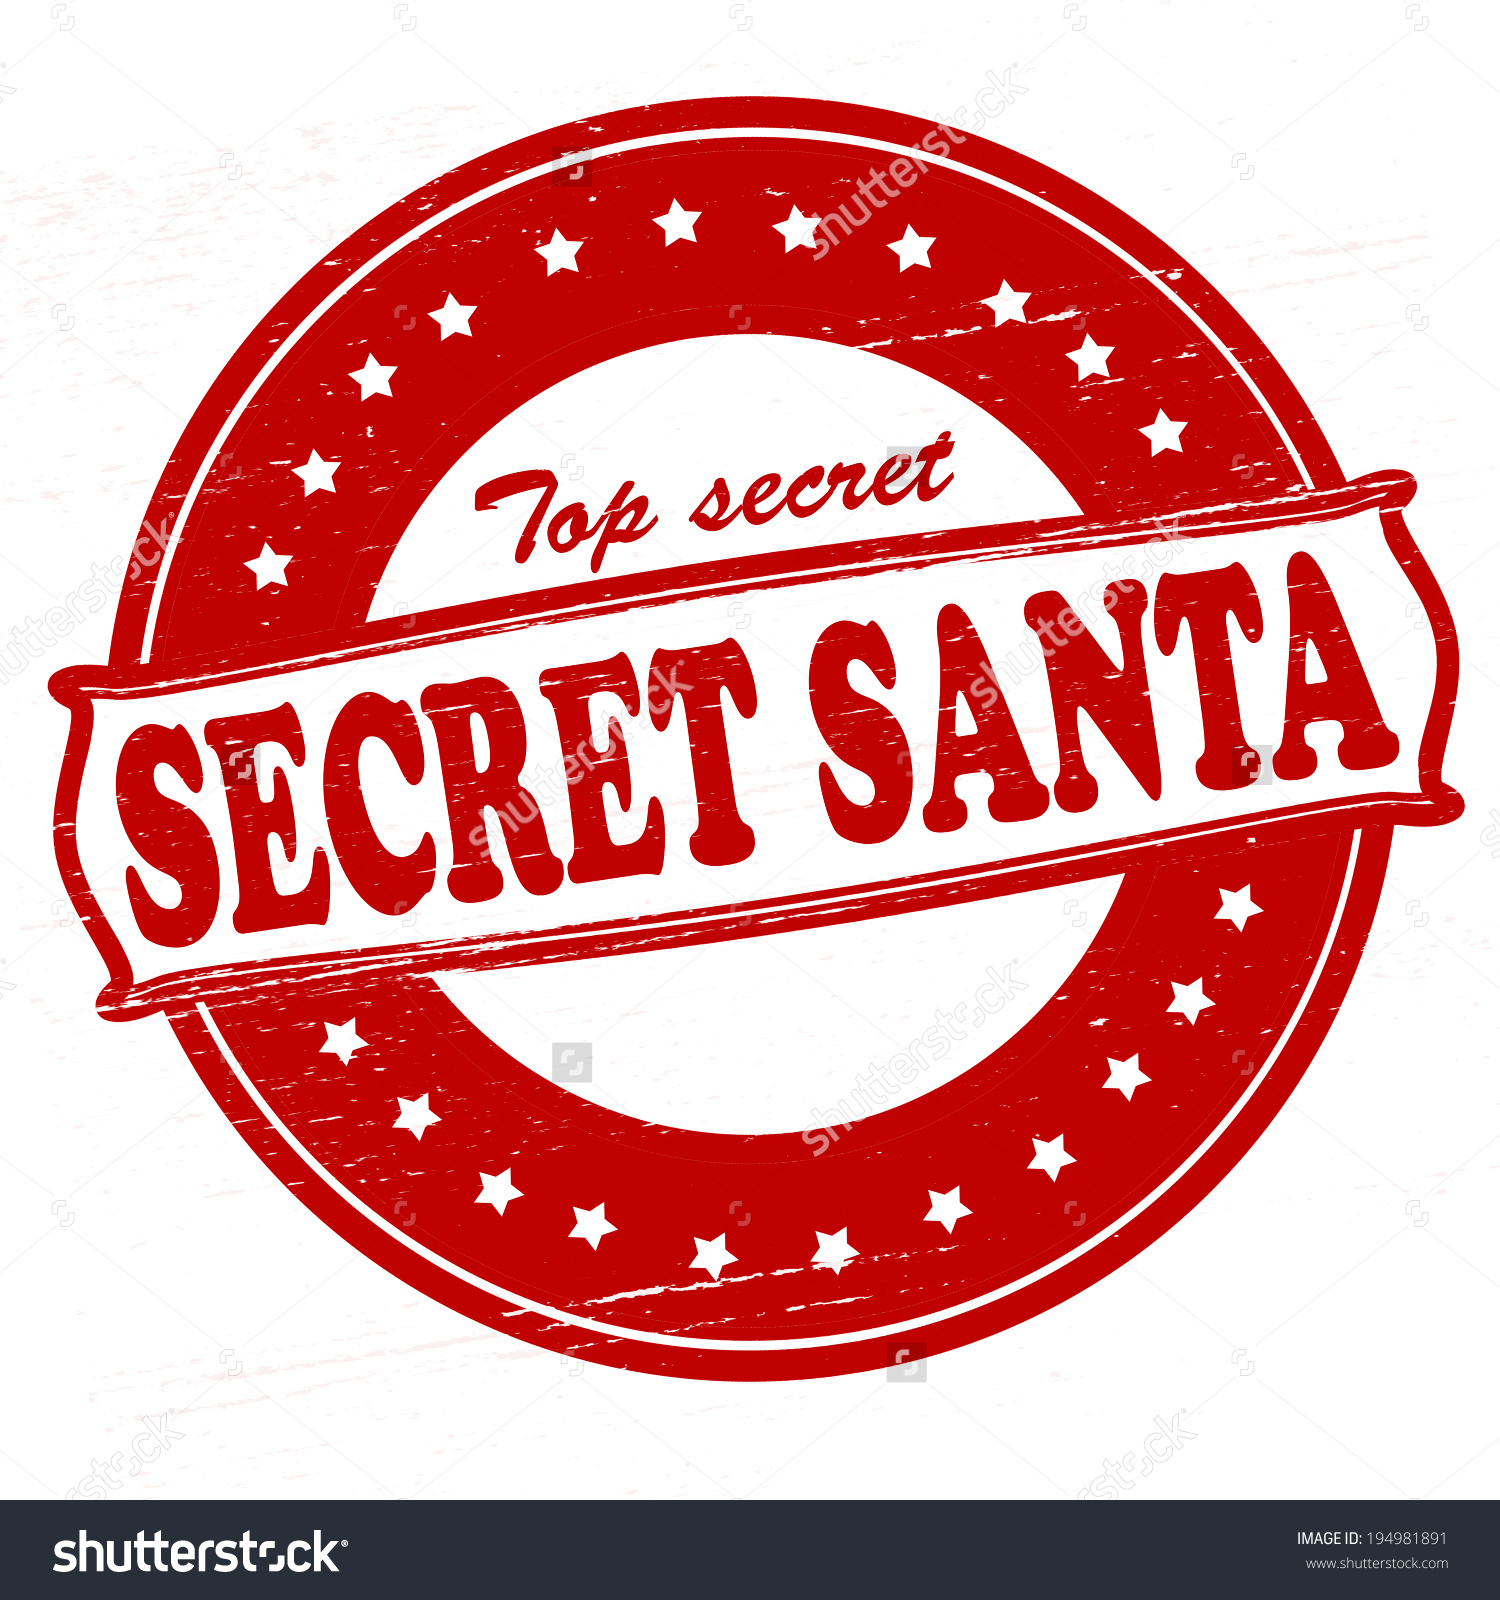 ... Free secret santa clipart